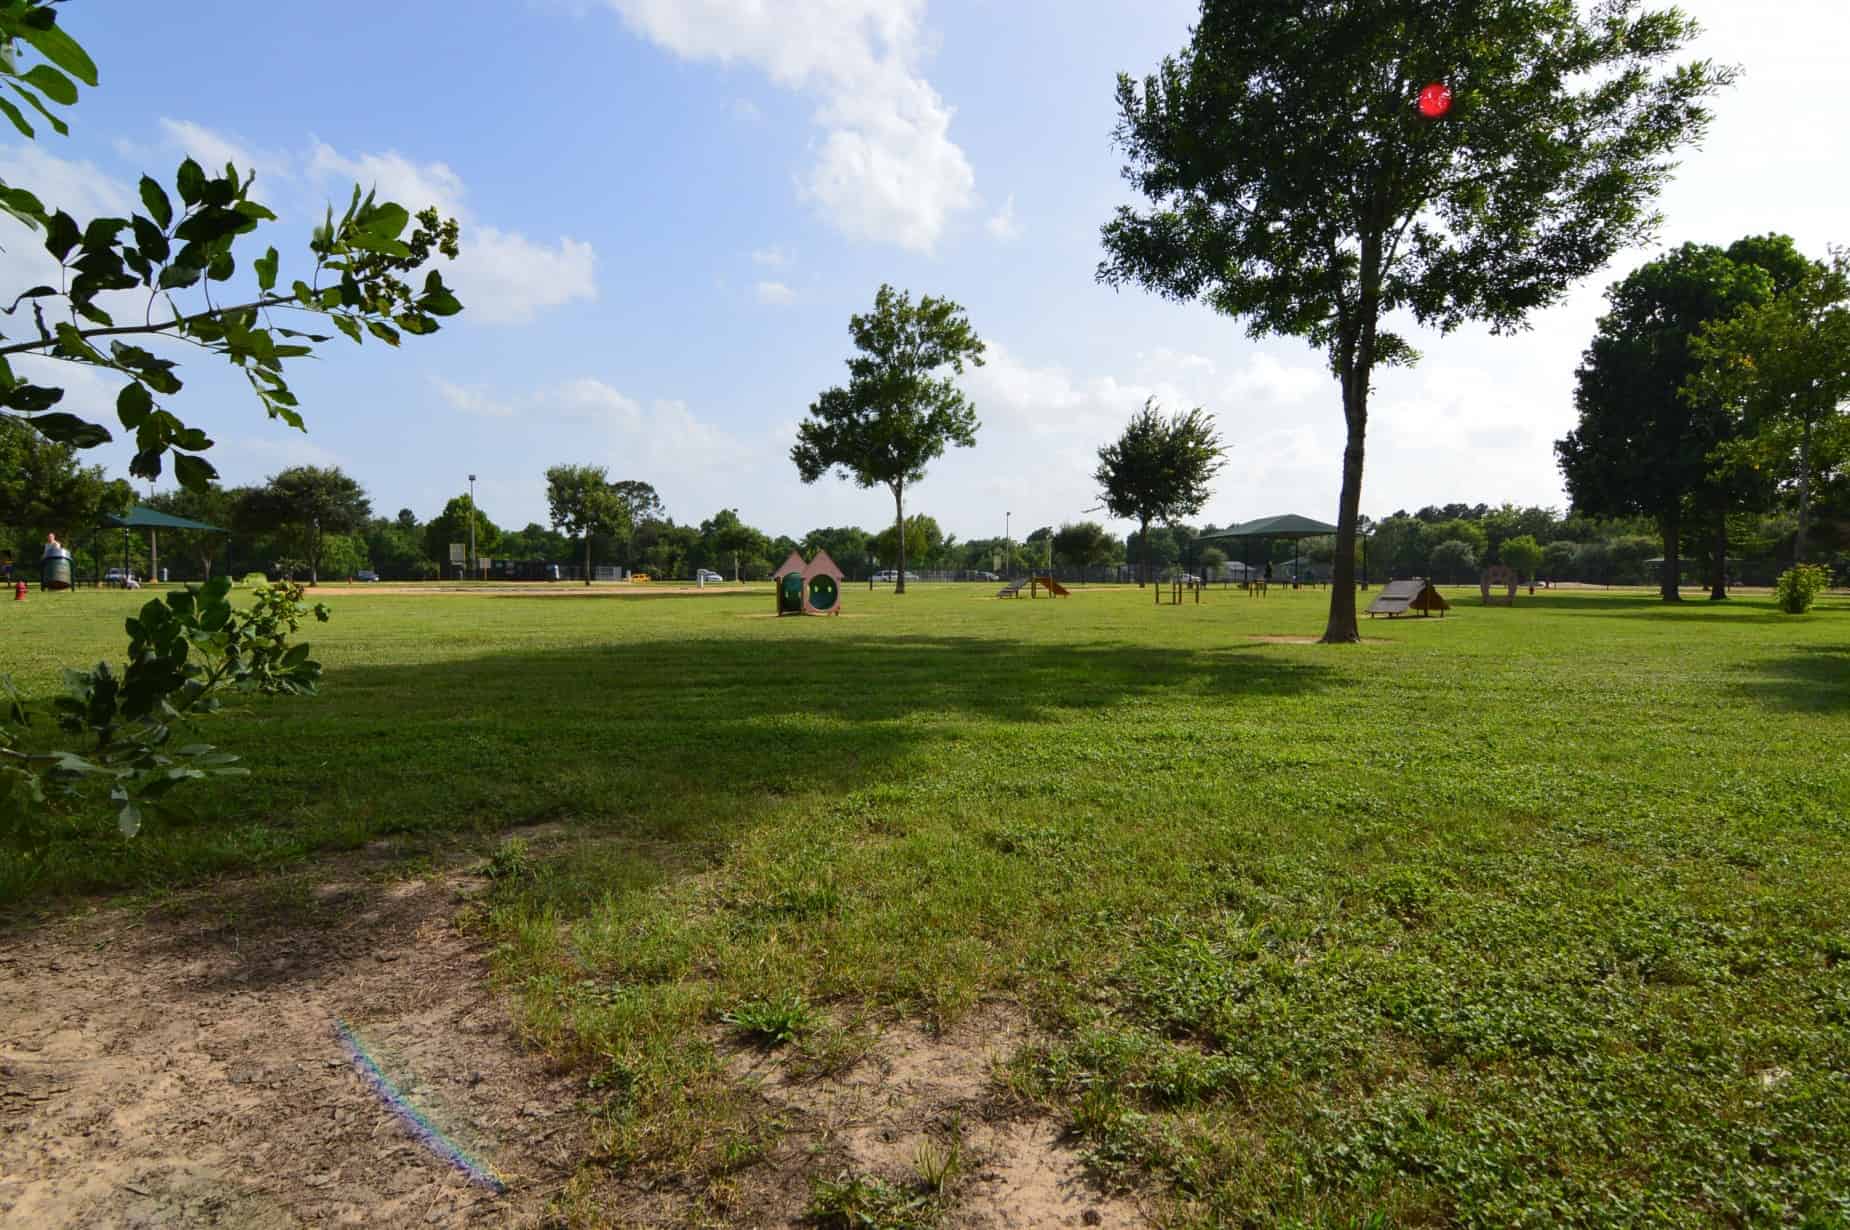 Congressman Bill Archer Dog Park Greenspace and Trails in Houston TX